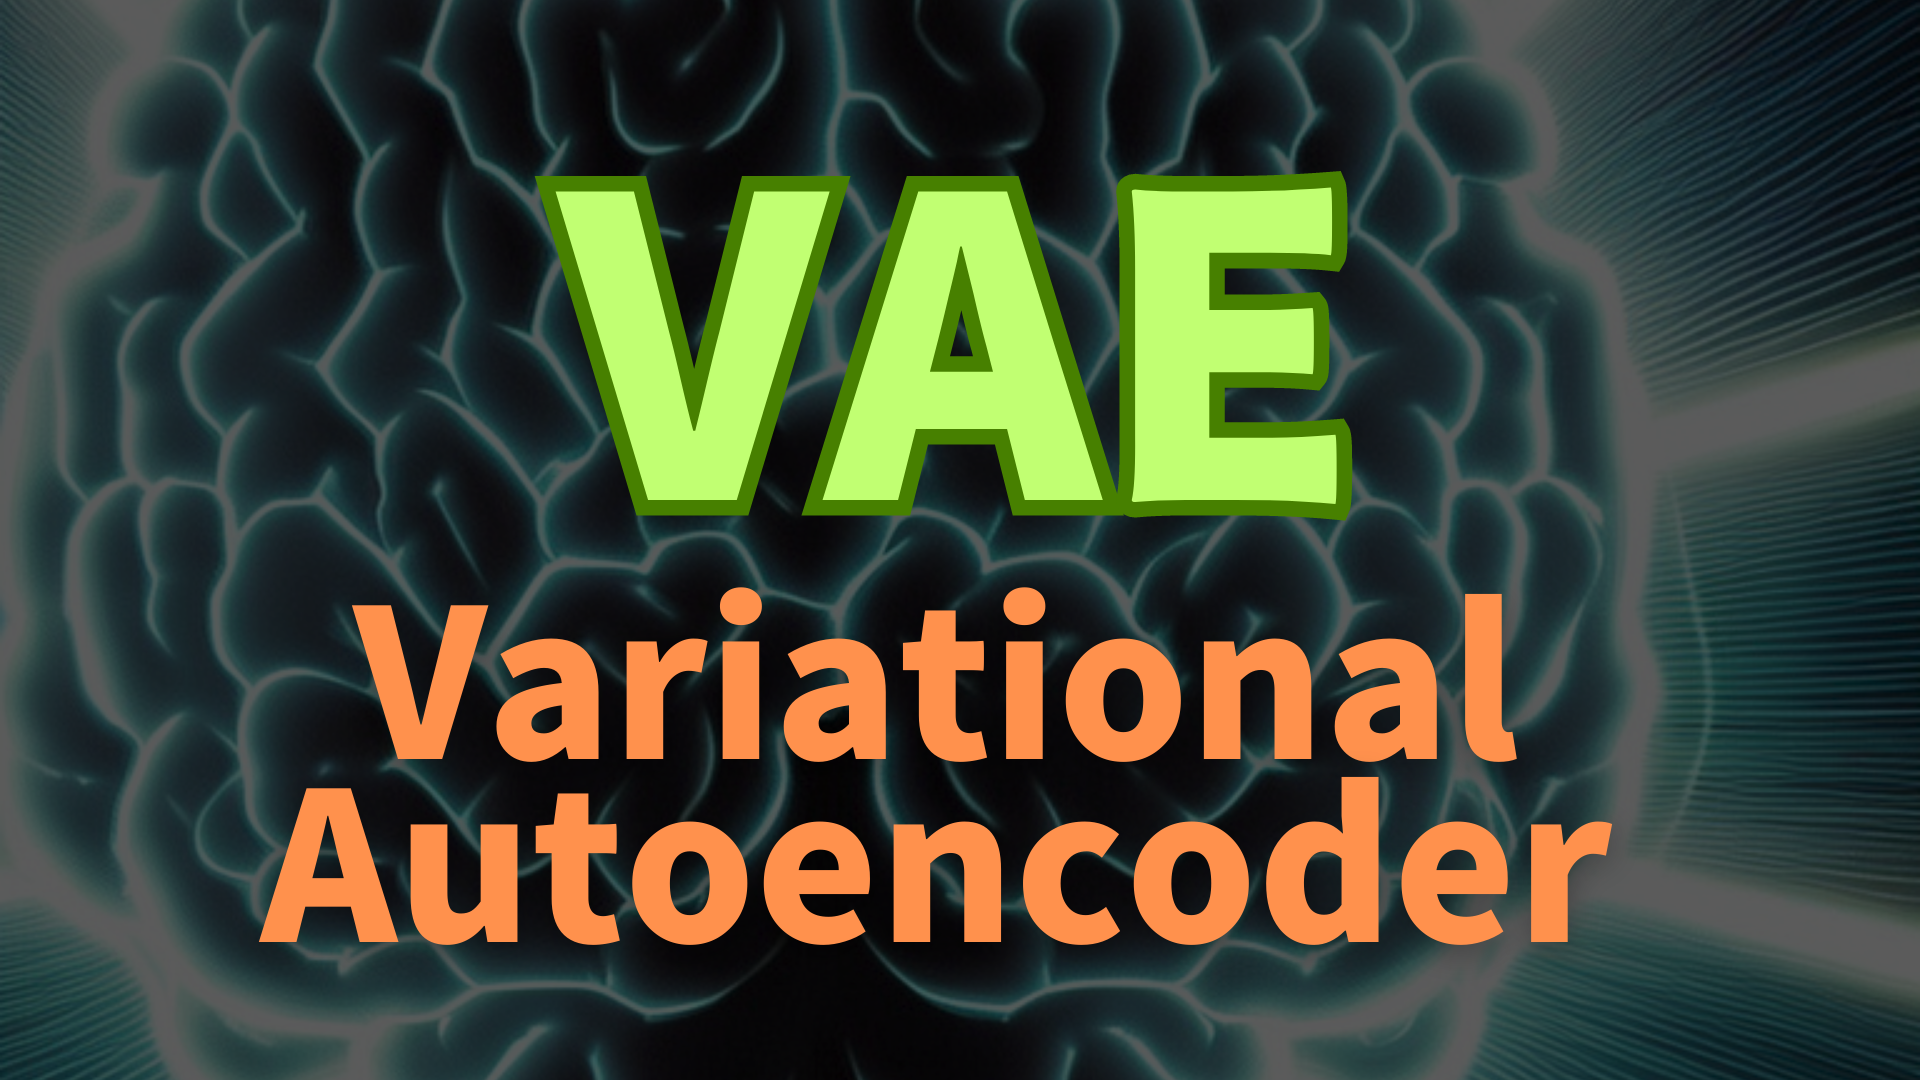 VAE: Variational Auto-Encoder (2013)